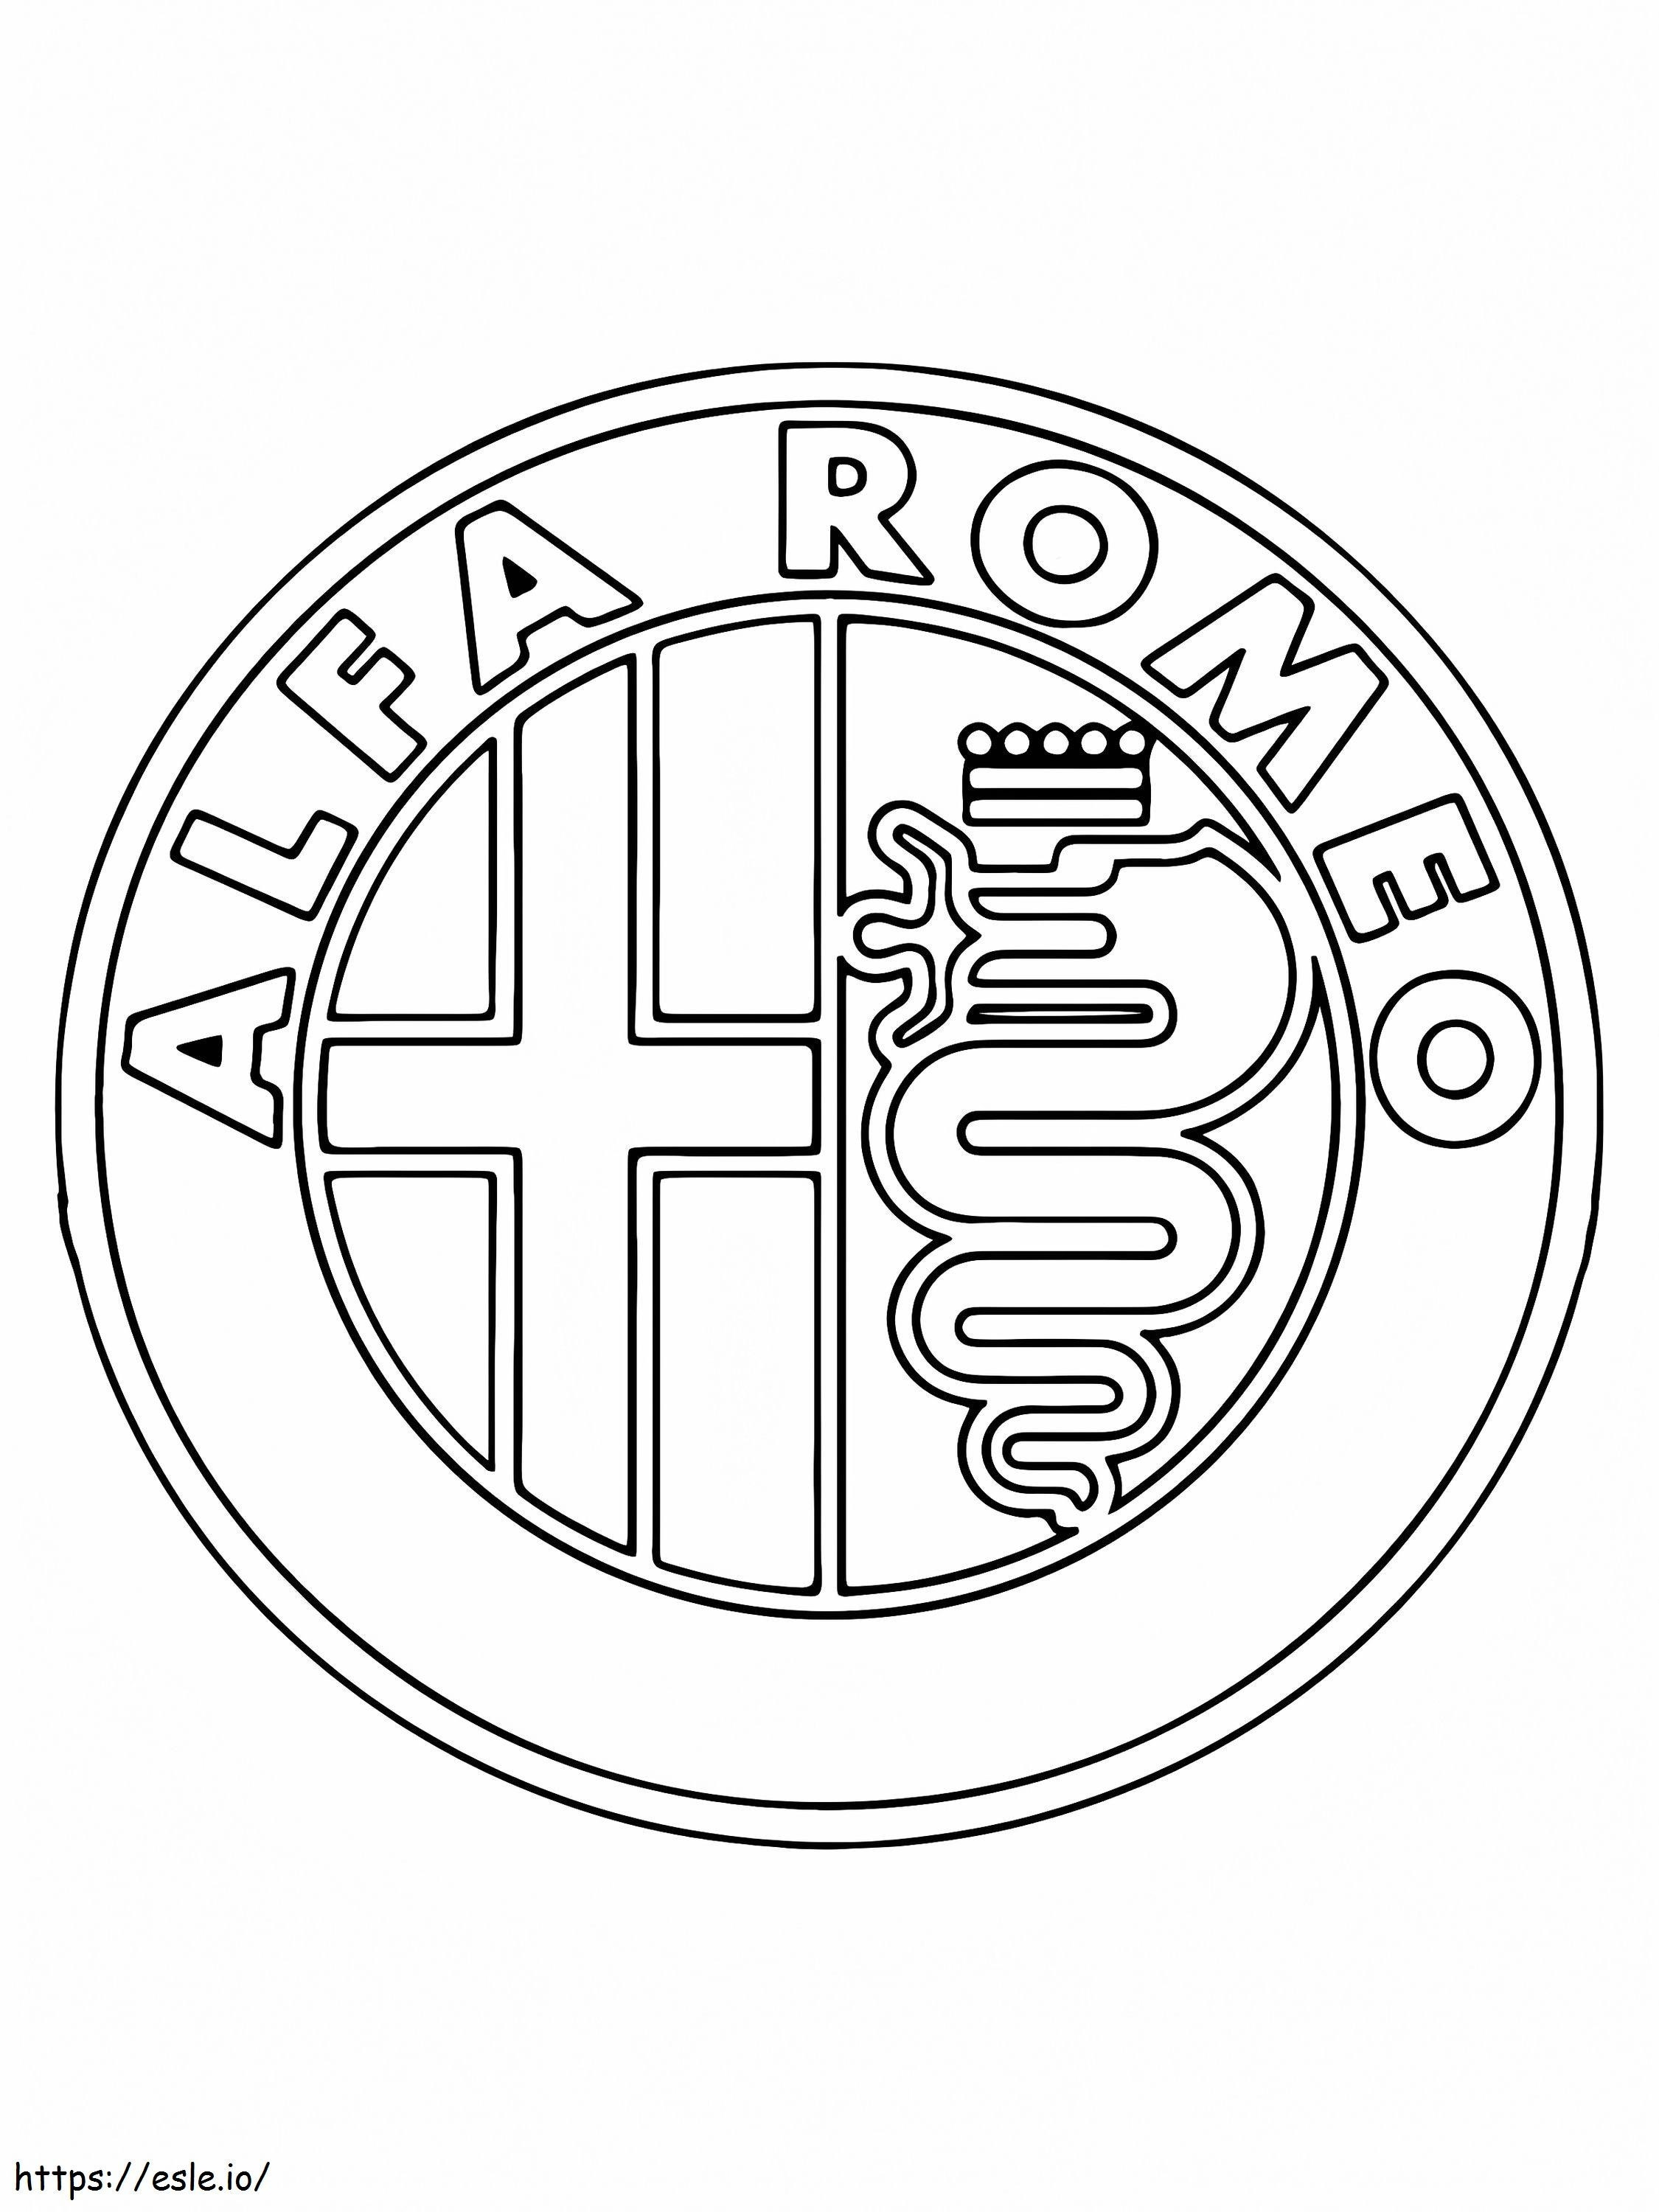 Logo samochodu Alfa Romeo kolorowanka